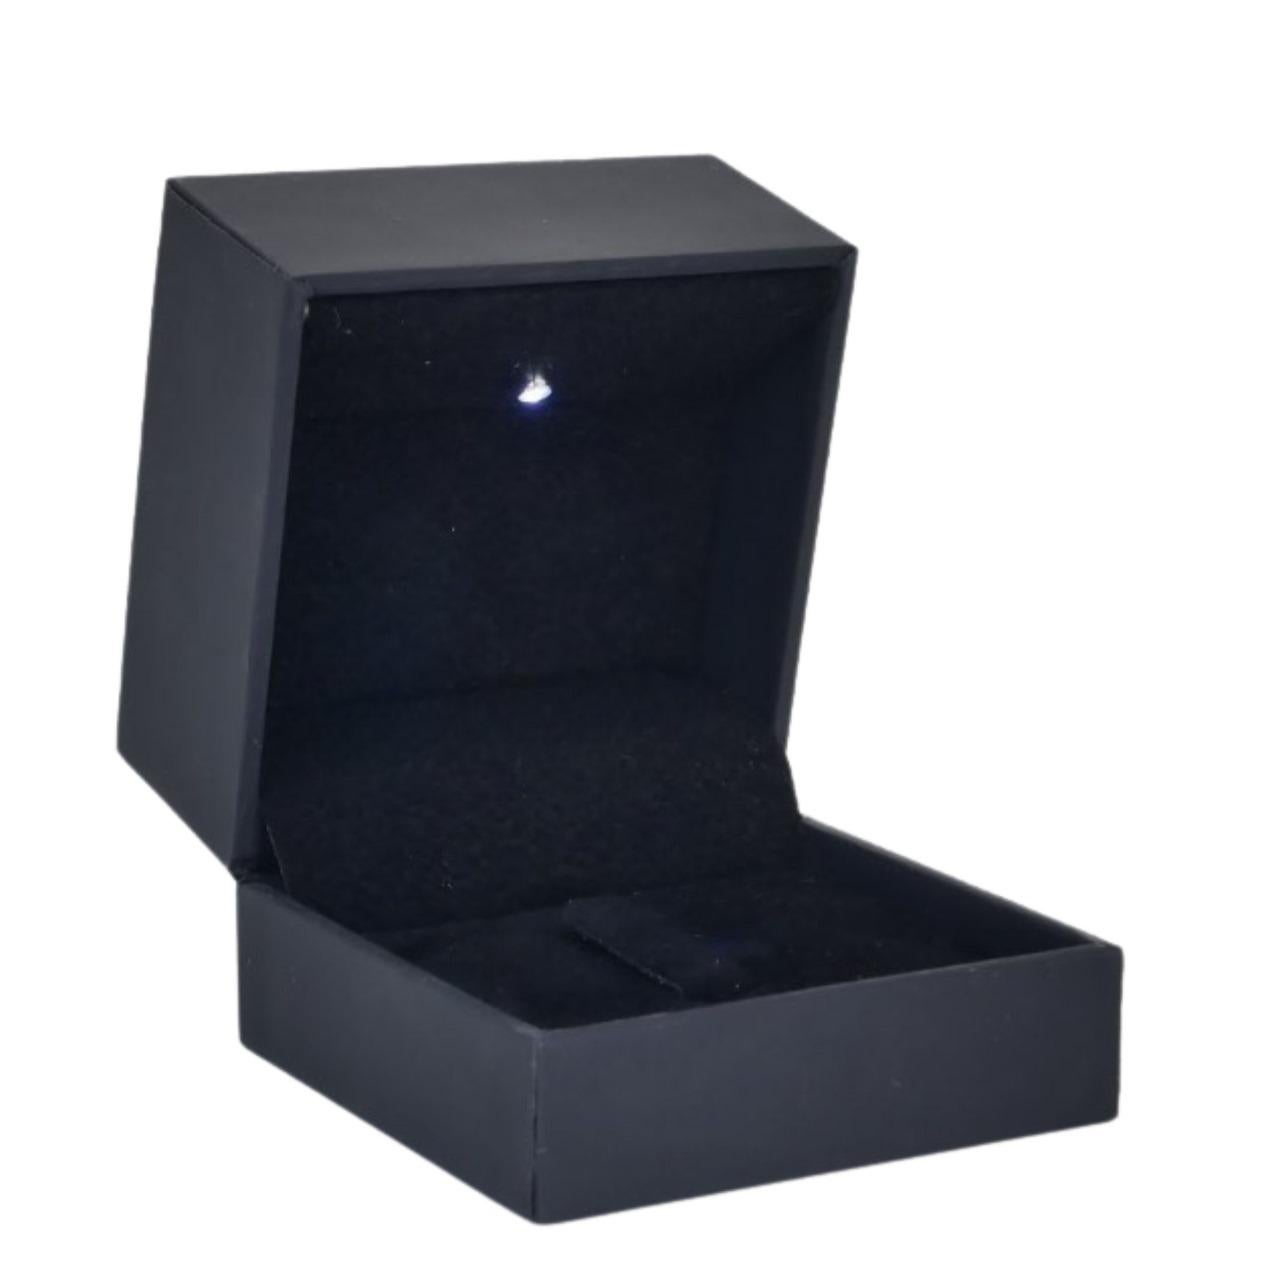 Exquisite 1.19 Carat Modified Brilliant Cut Diamond Ring in 18K White Gold For Sale 3